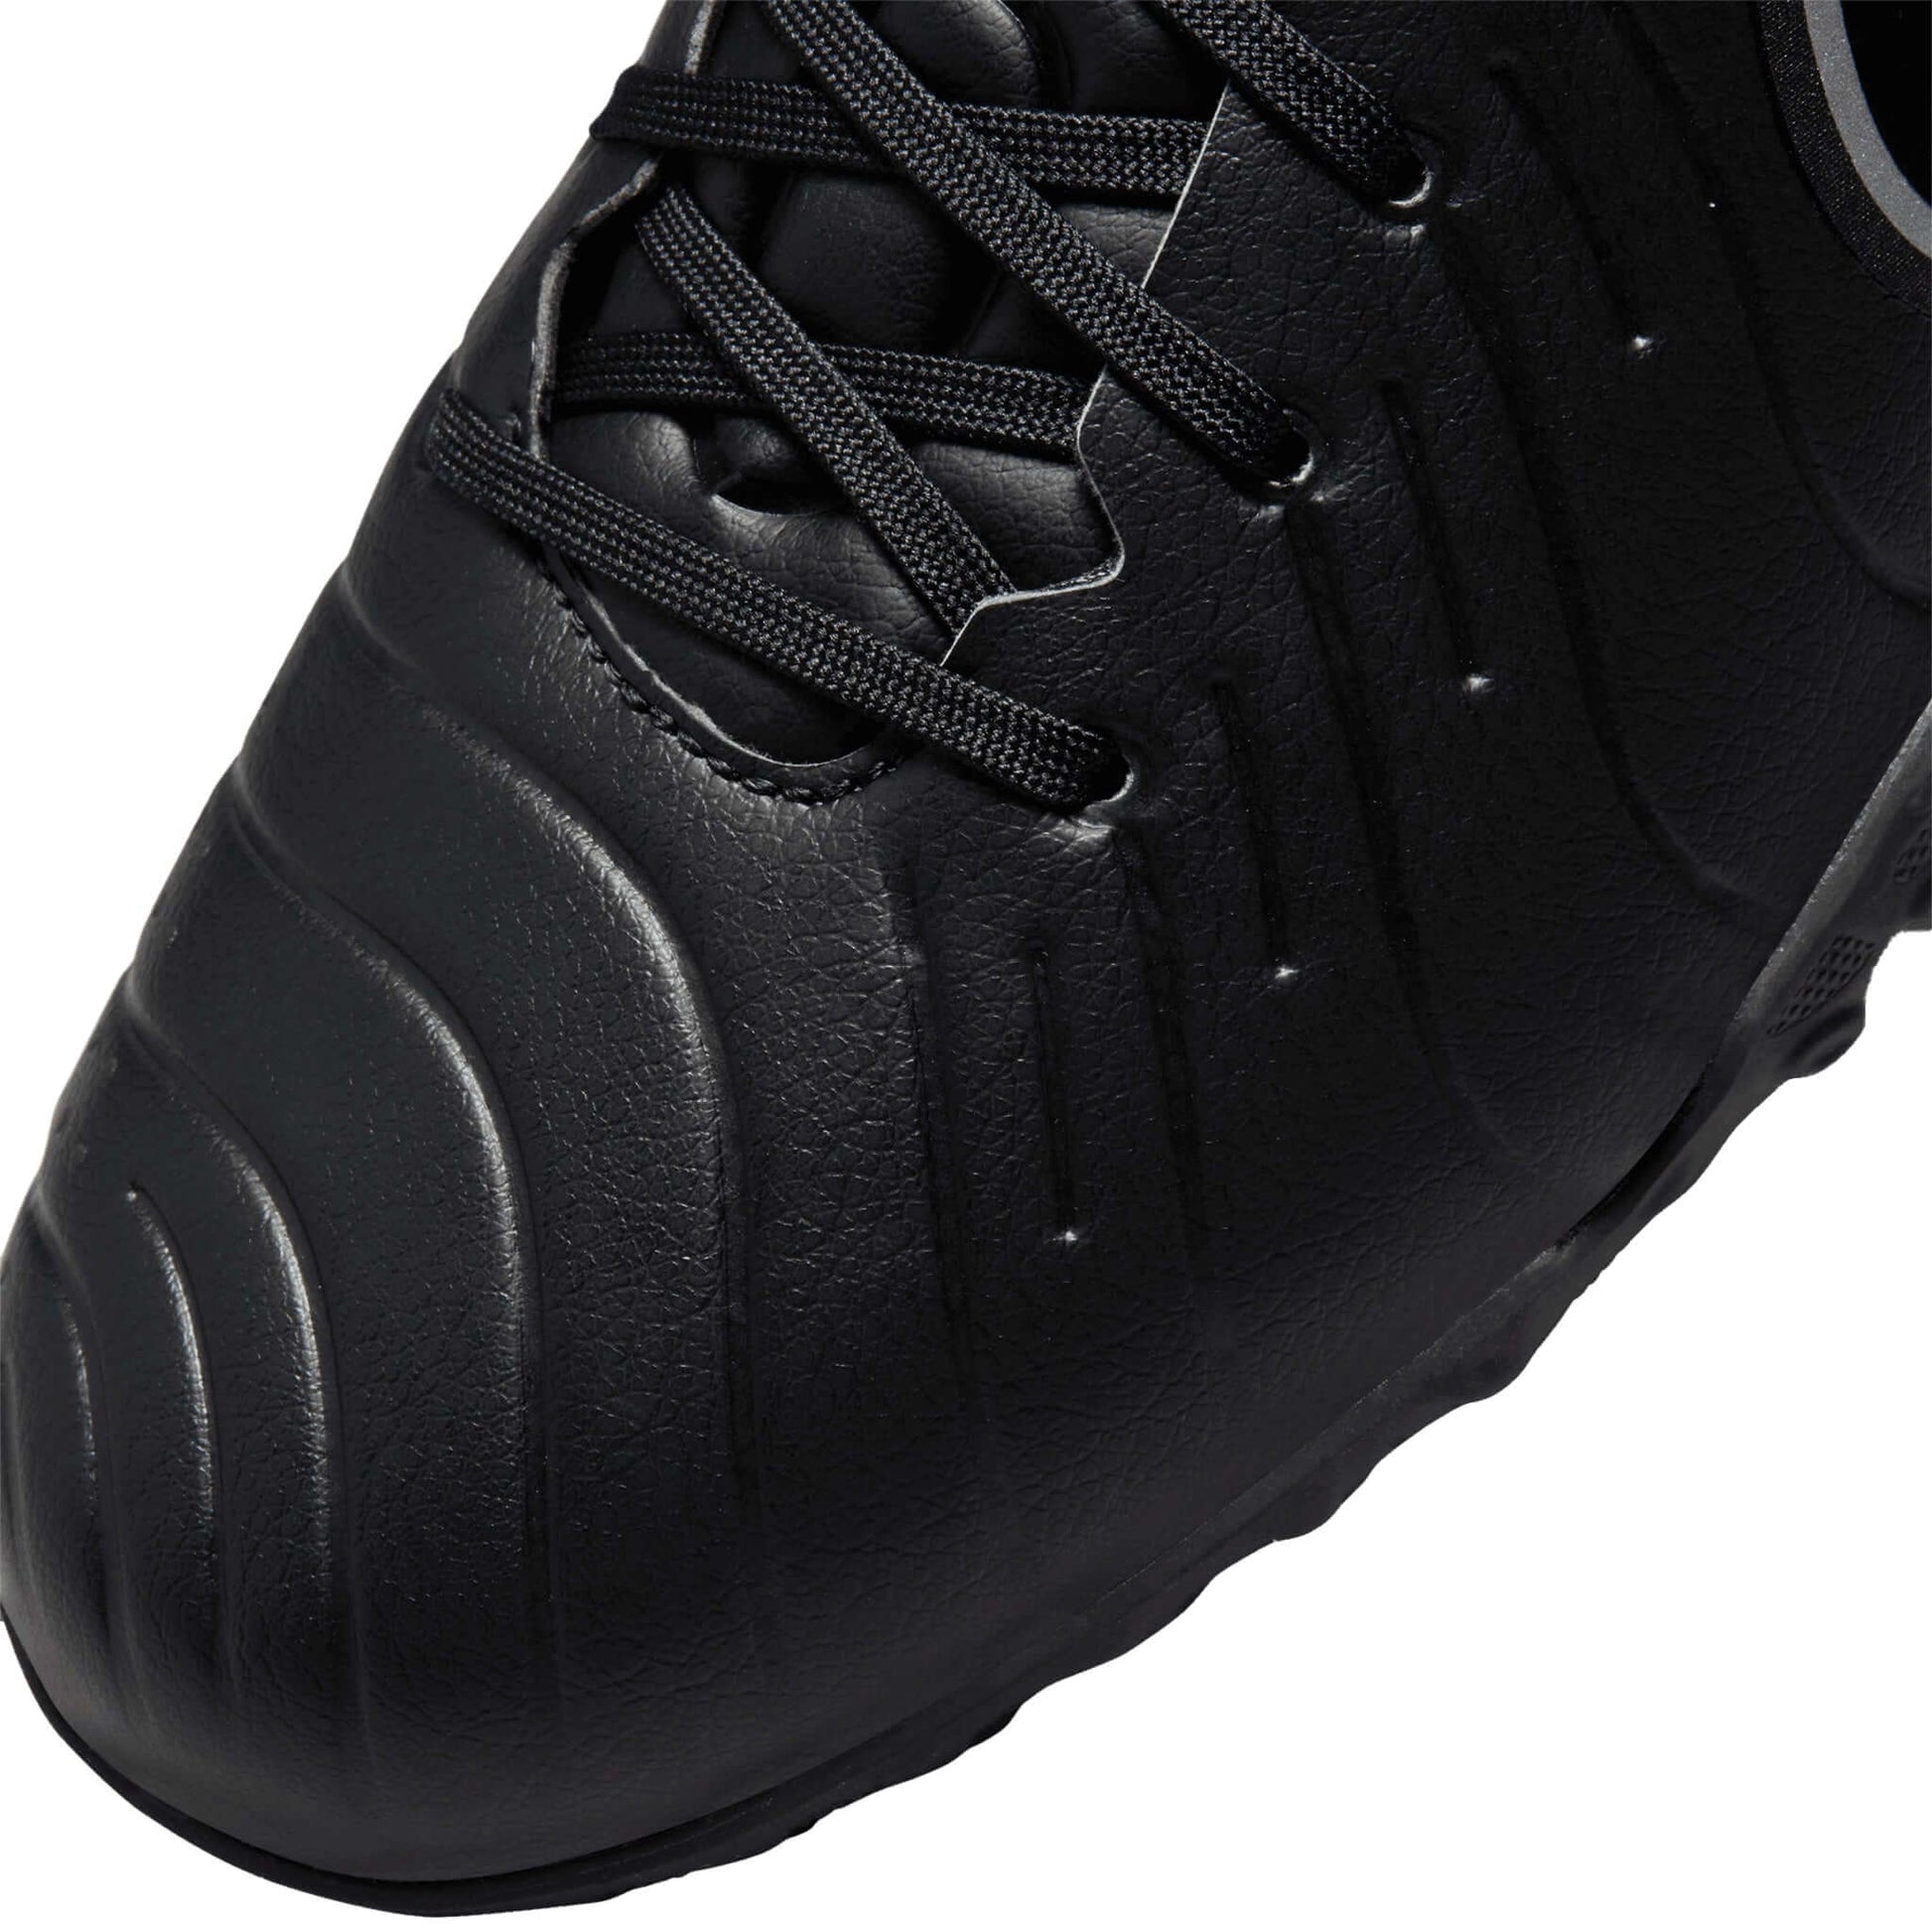 Tiempo Legend 10 Academy Turf Soccer Shoes | EvangelistaSports.com | Canada's Premiere Soccer Store